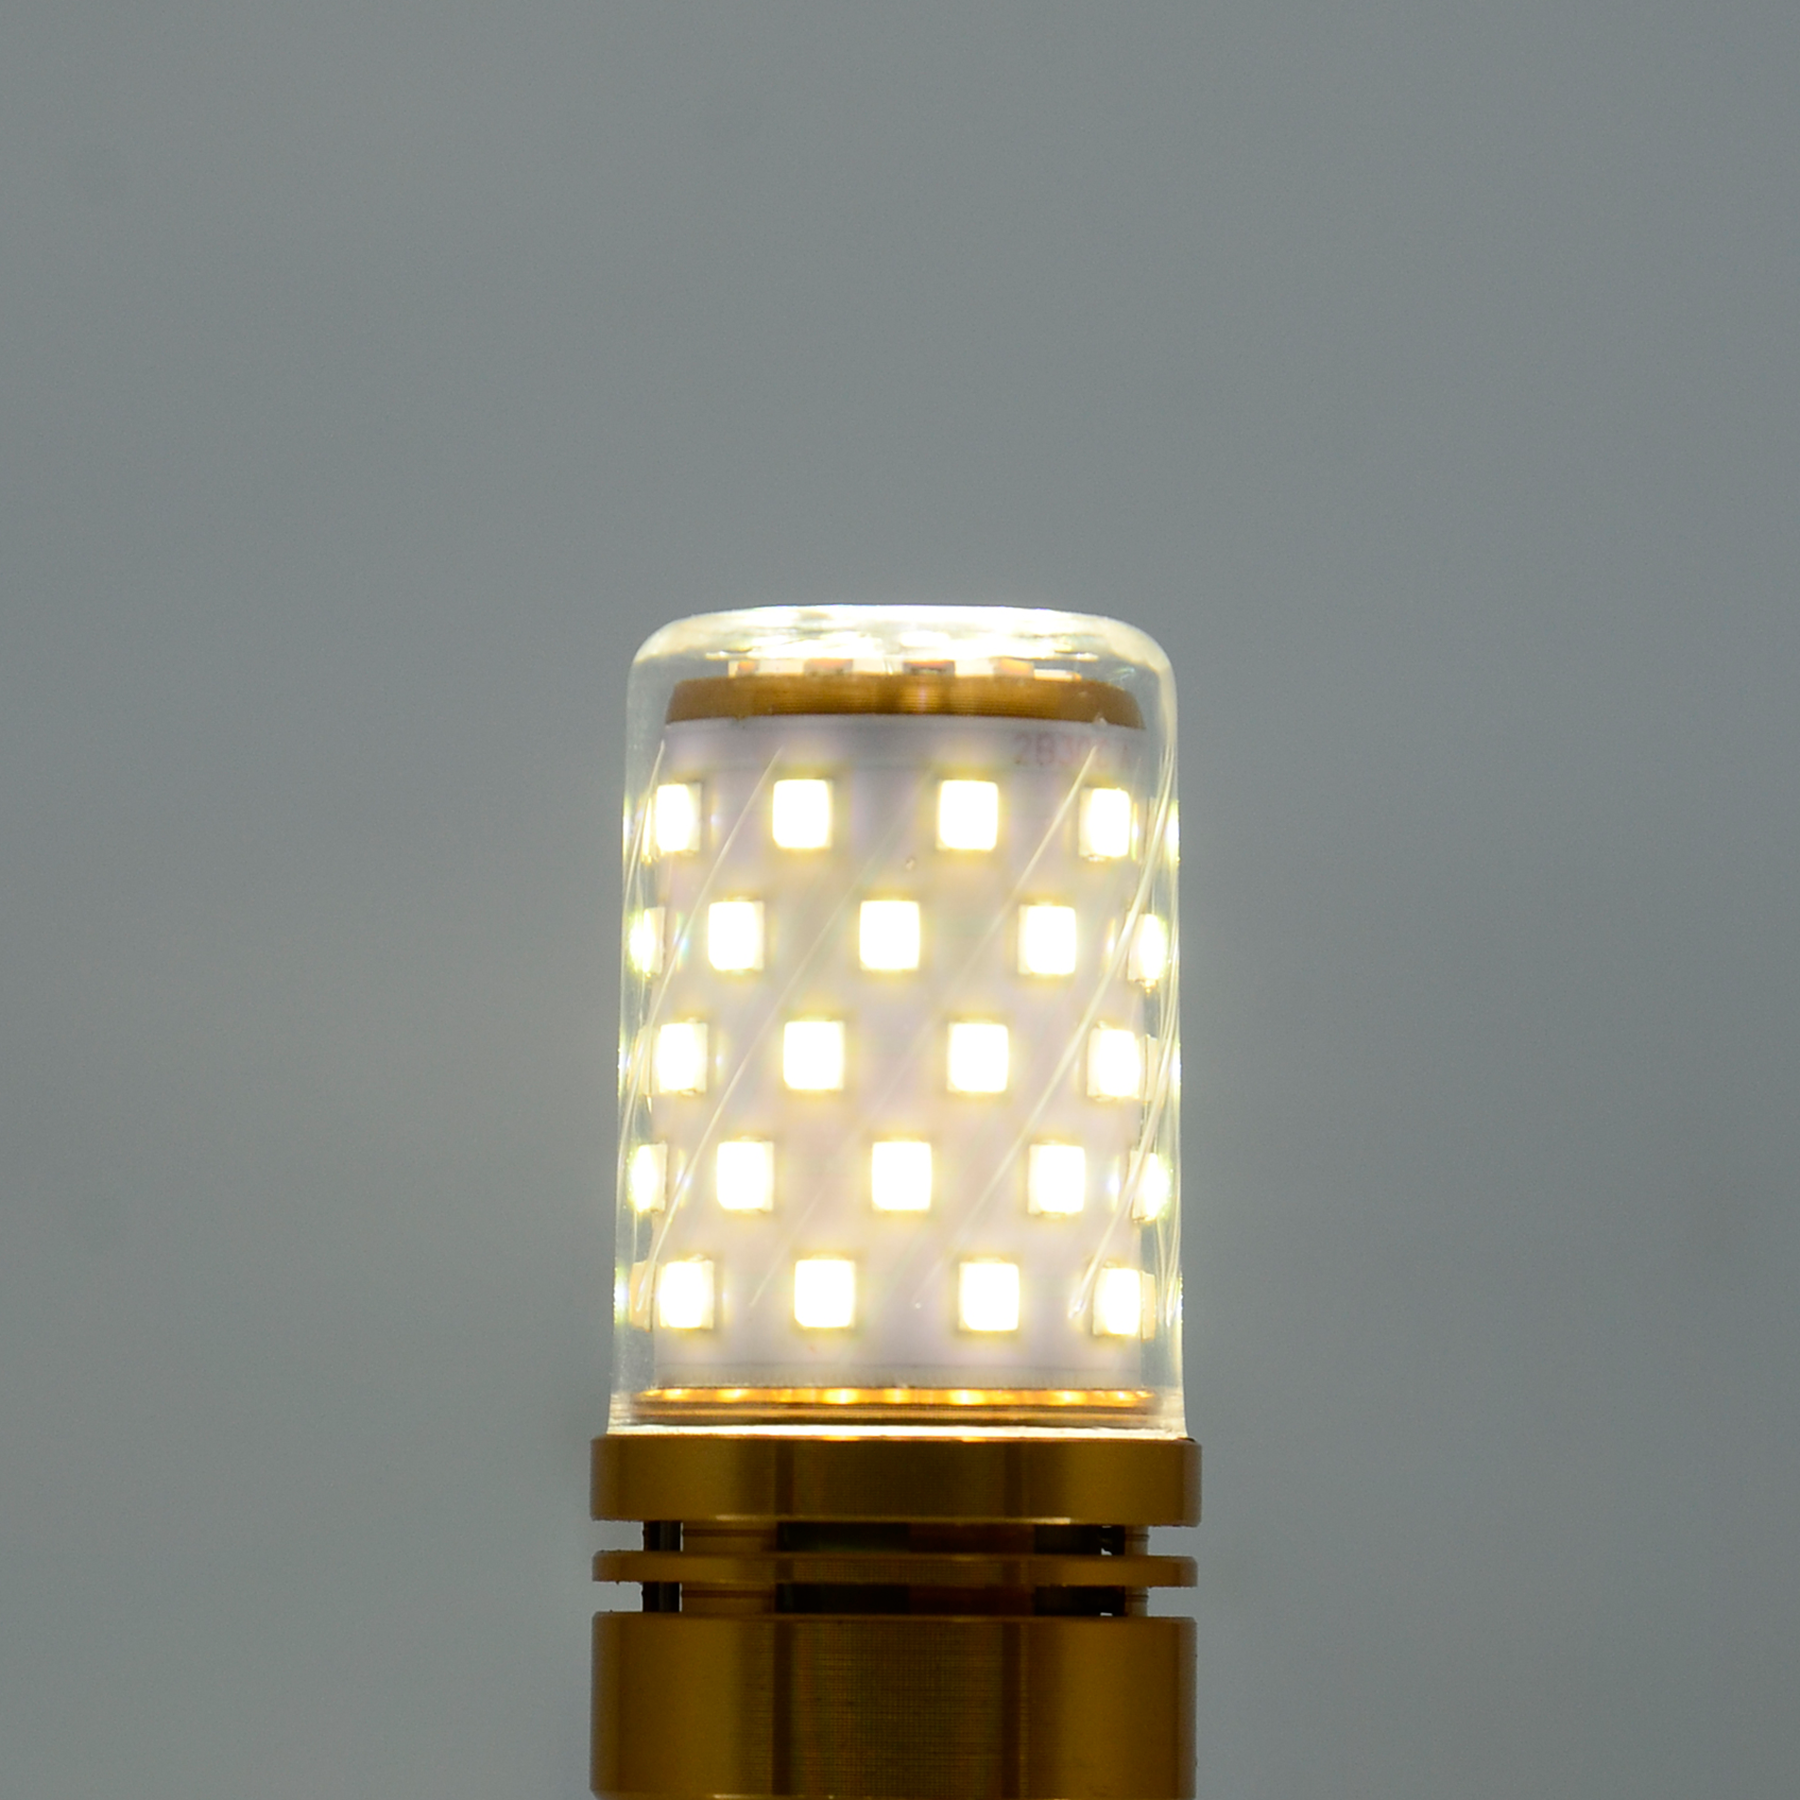 G.W.S LED Wholesale LED Bulbs B22 Bayonet LED Corn Bulb